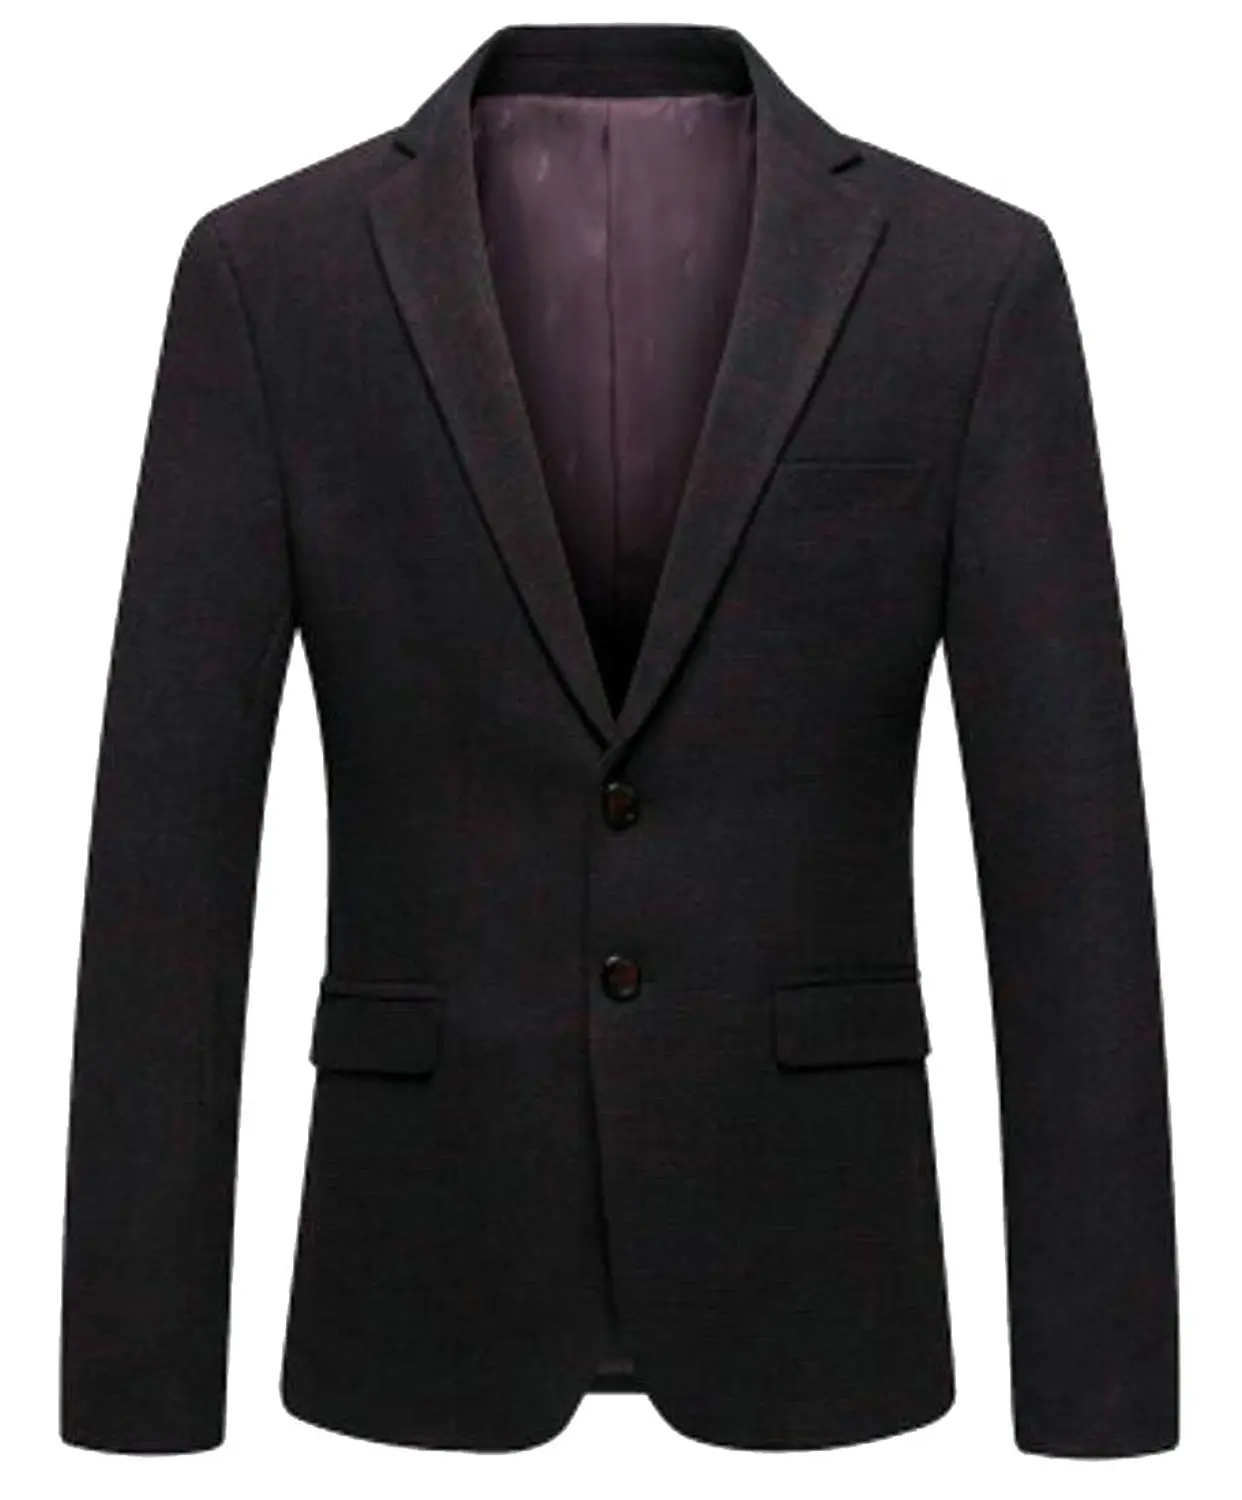 Fulok Mens Casual Dress Suit Slim Fit Stylish Blazer Sport Coats Jackets